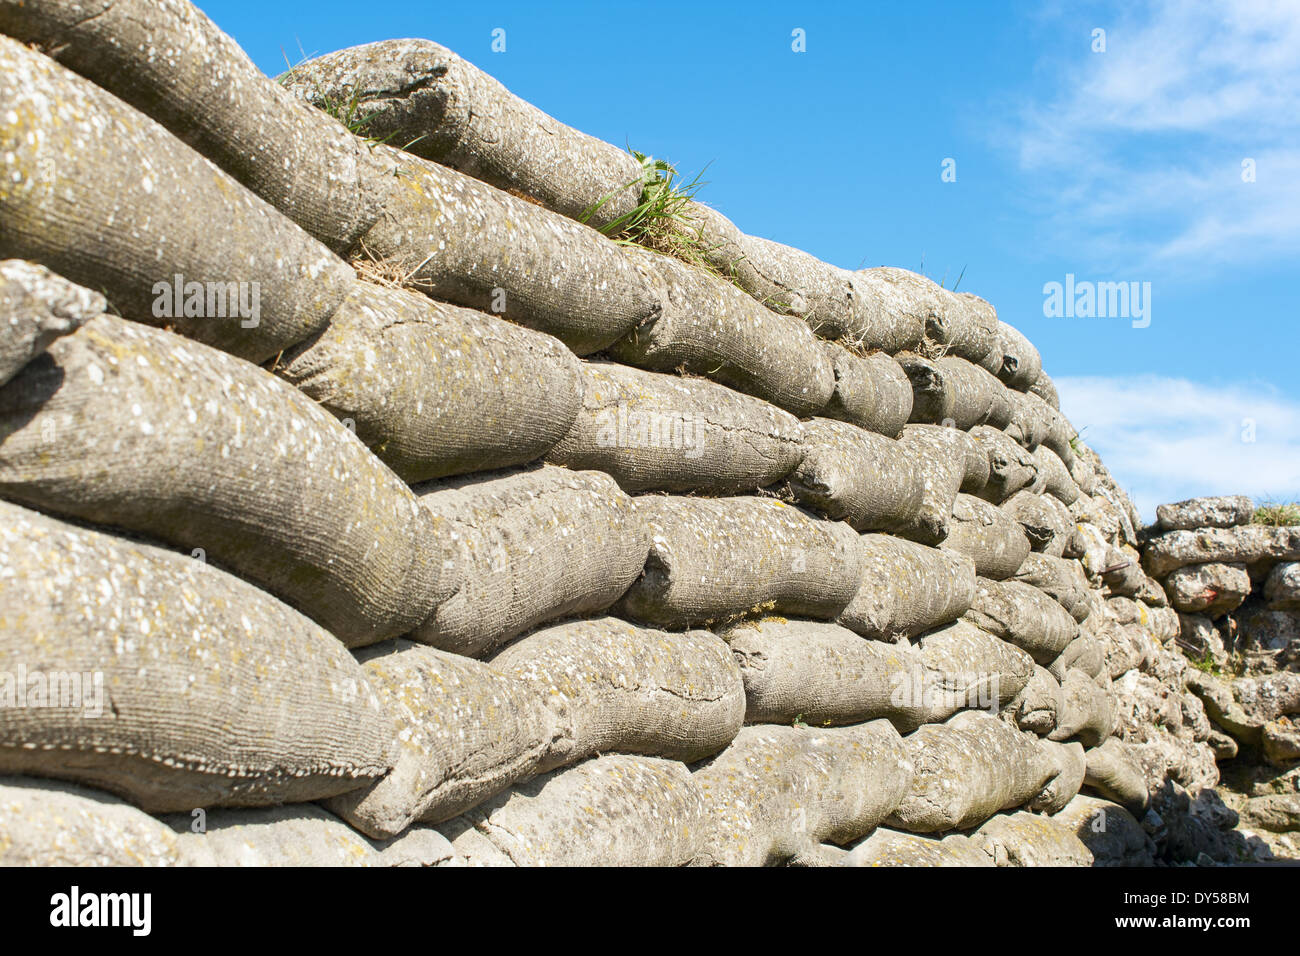 sandbags world war 1 trench of death Flanders Belgium Stock Photo